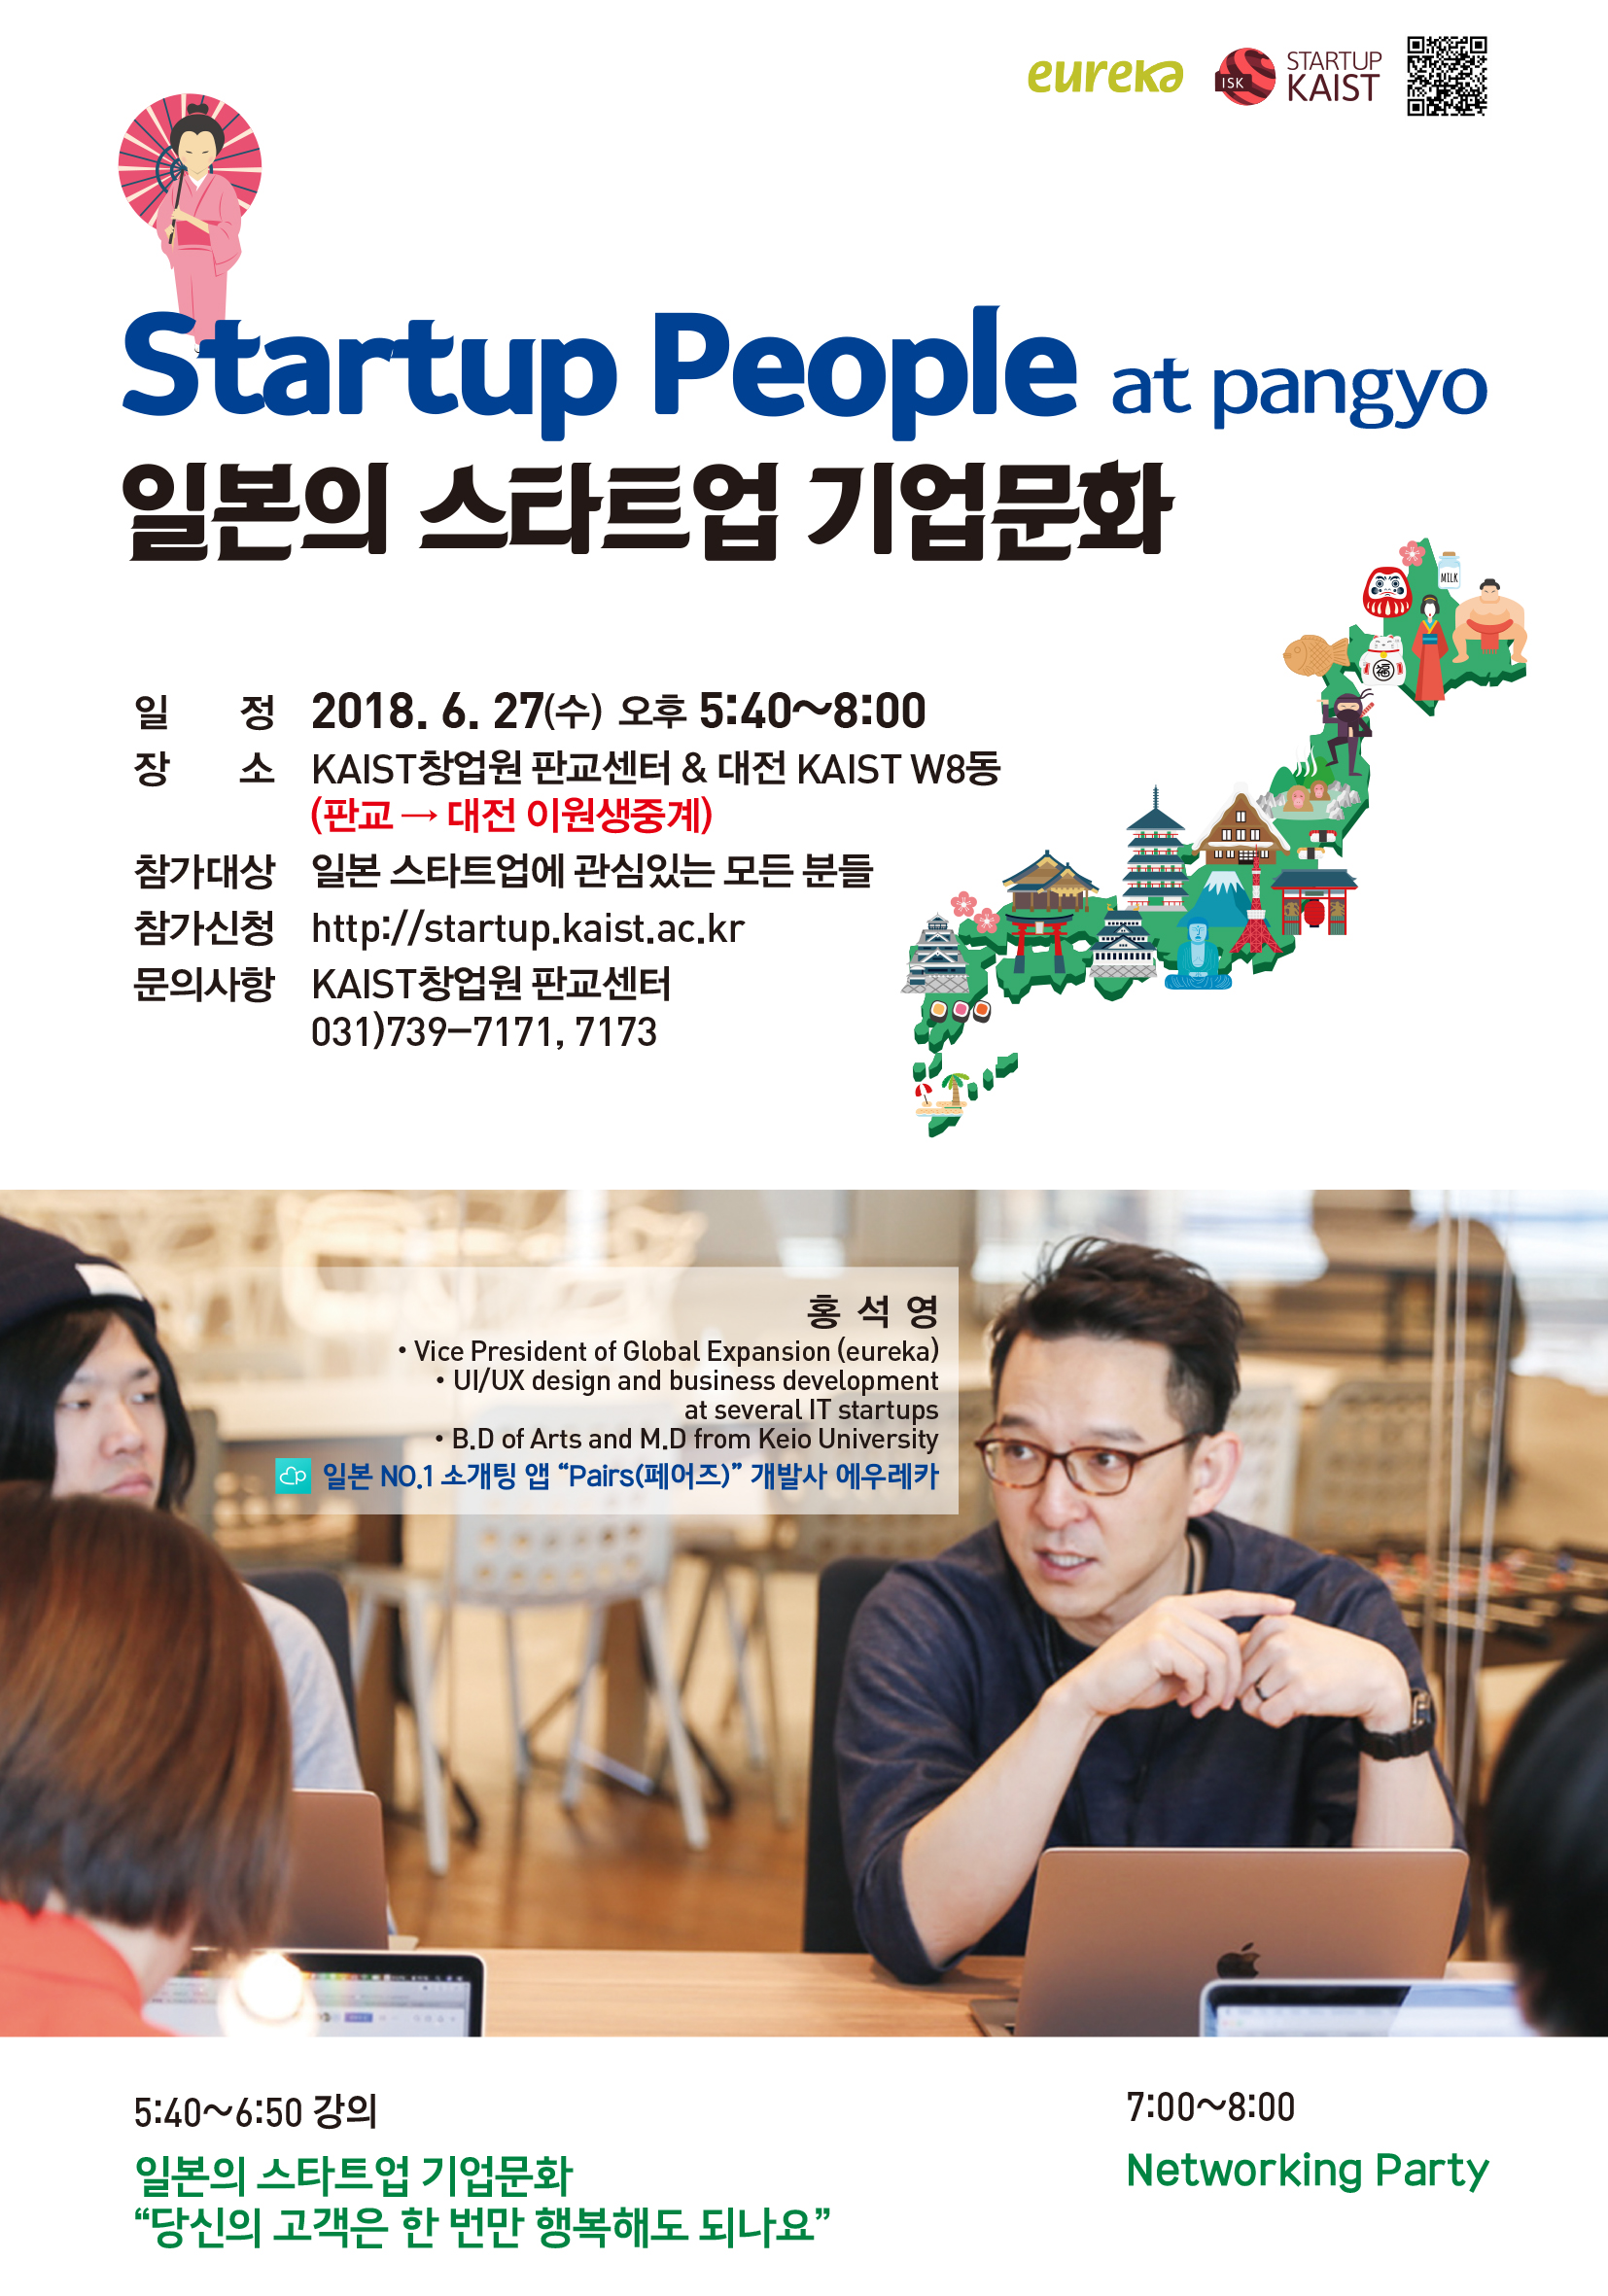 [6/27] Startup People at pangyo “일본 스타트업 기업문화”